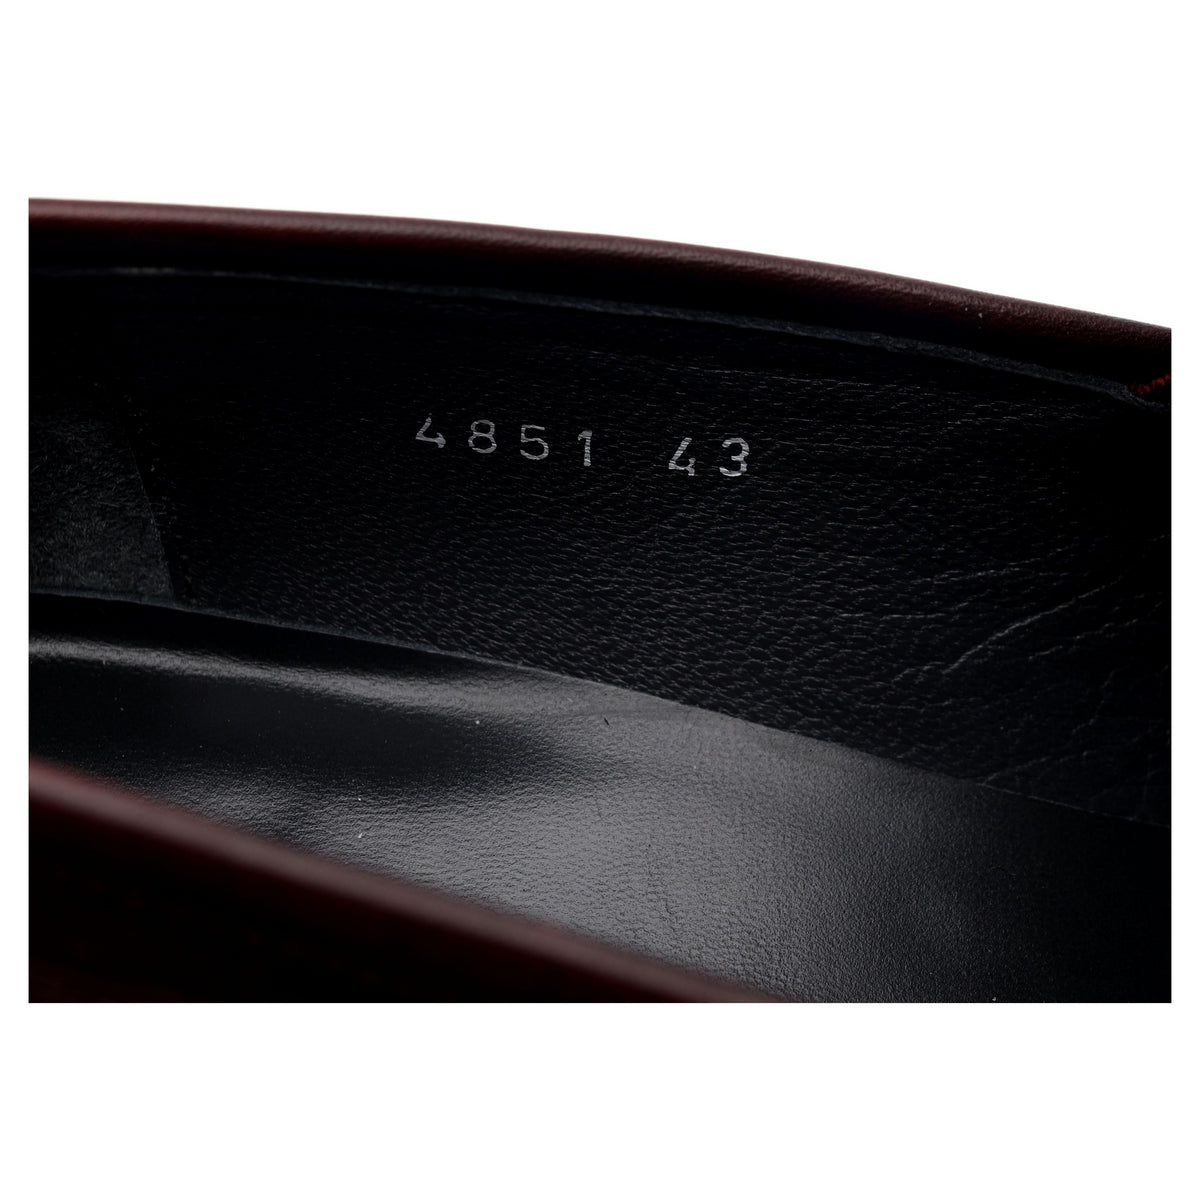 &#39;Dillon&#39; Burgundy Leather Horsebit Loafers UK 9 F